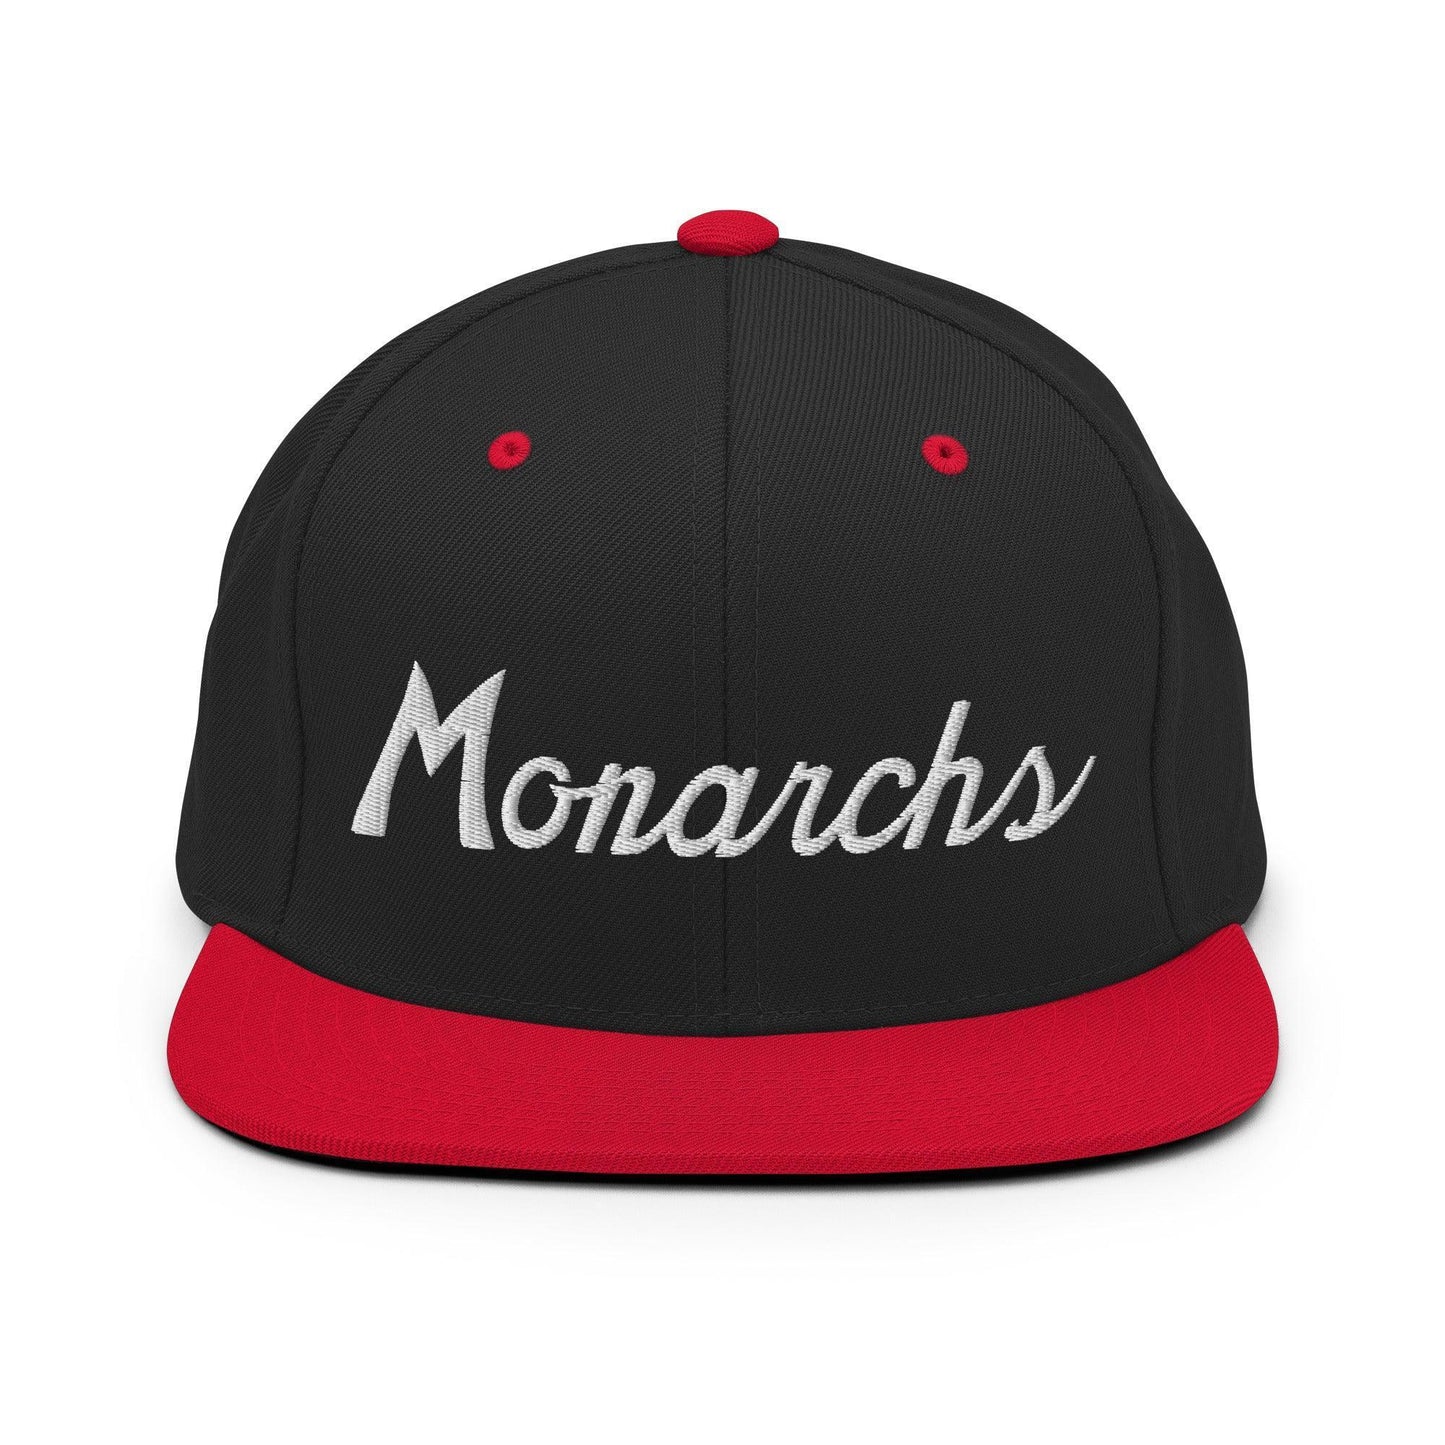 Monarchs School Mascot Script Snapback Hat Black/ Red